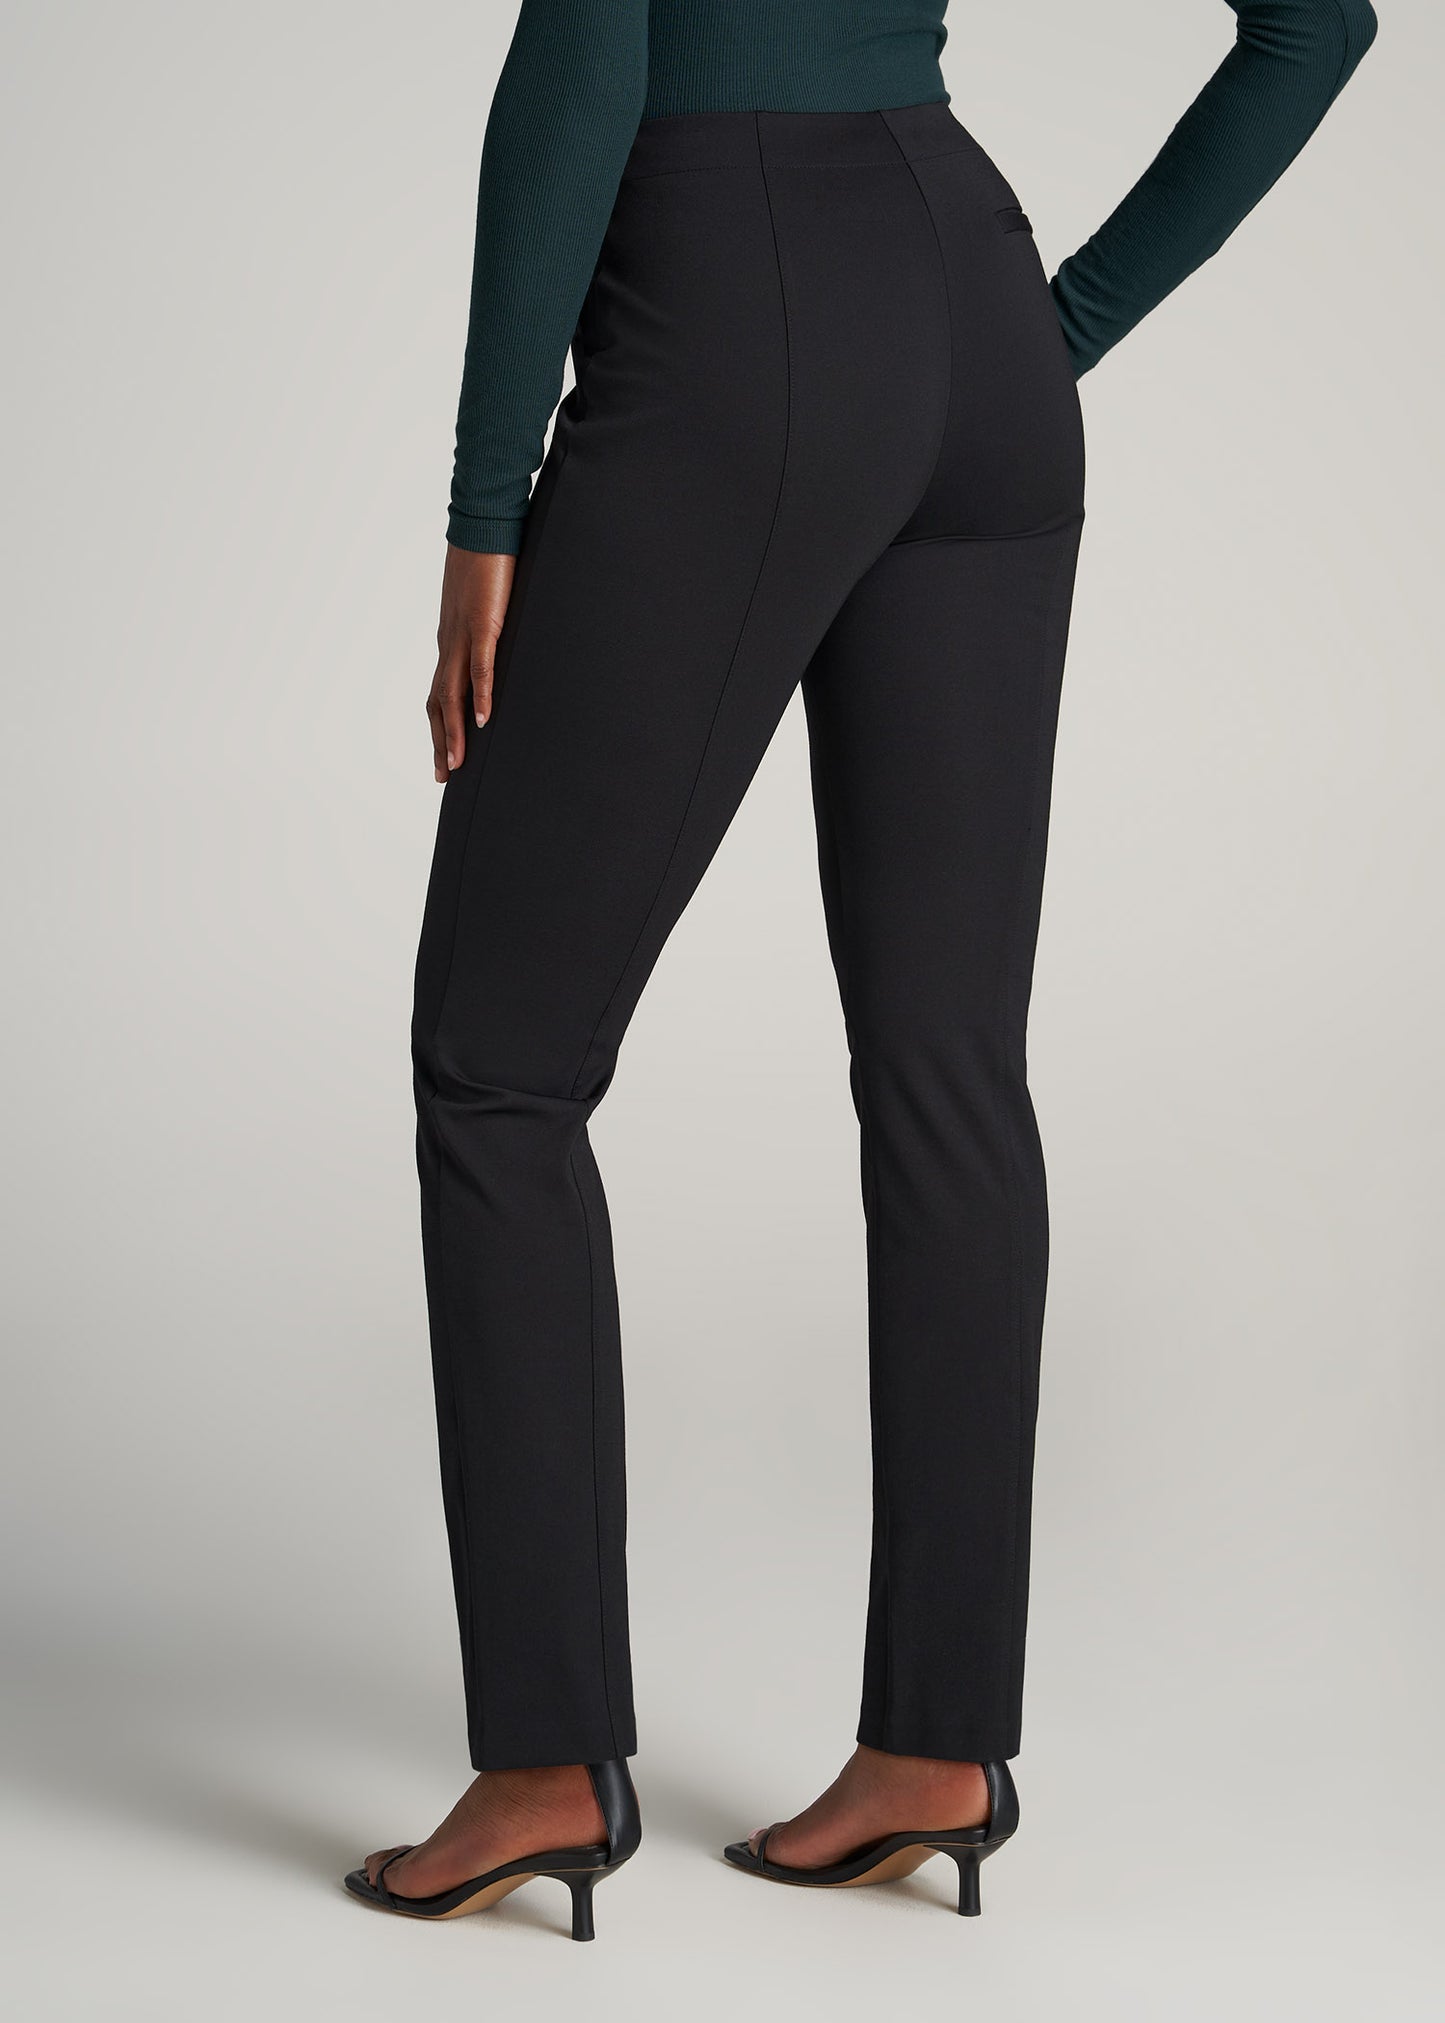 Women's Tall Dress Pants: Slim Leg Black Dress Pant